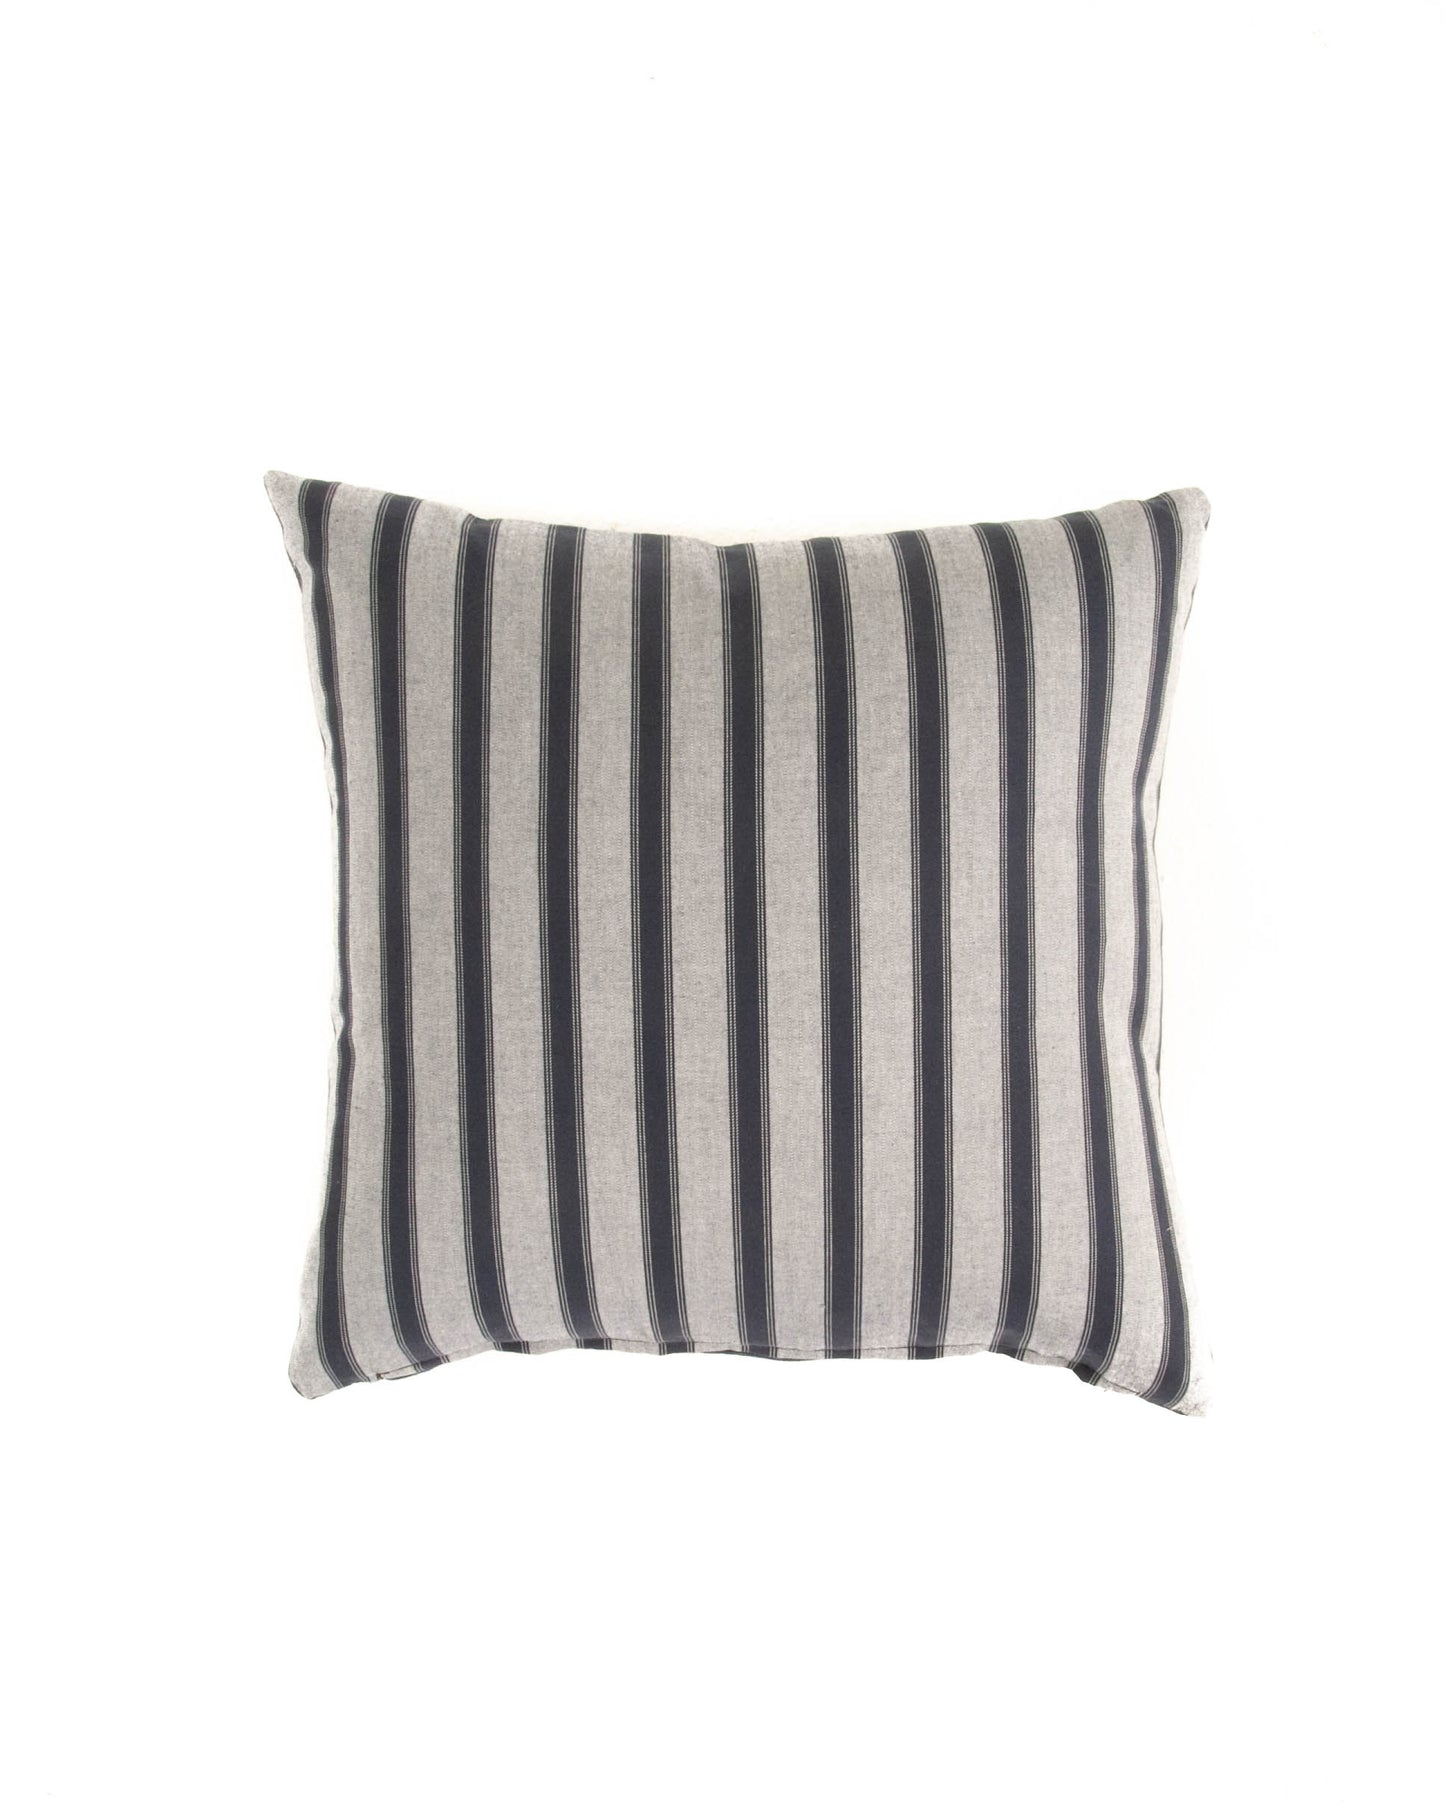 Blazer Stripe Pillow